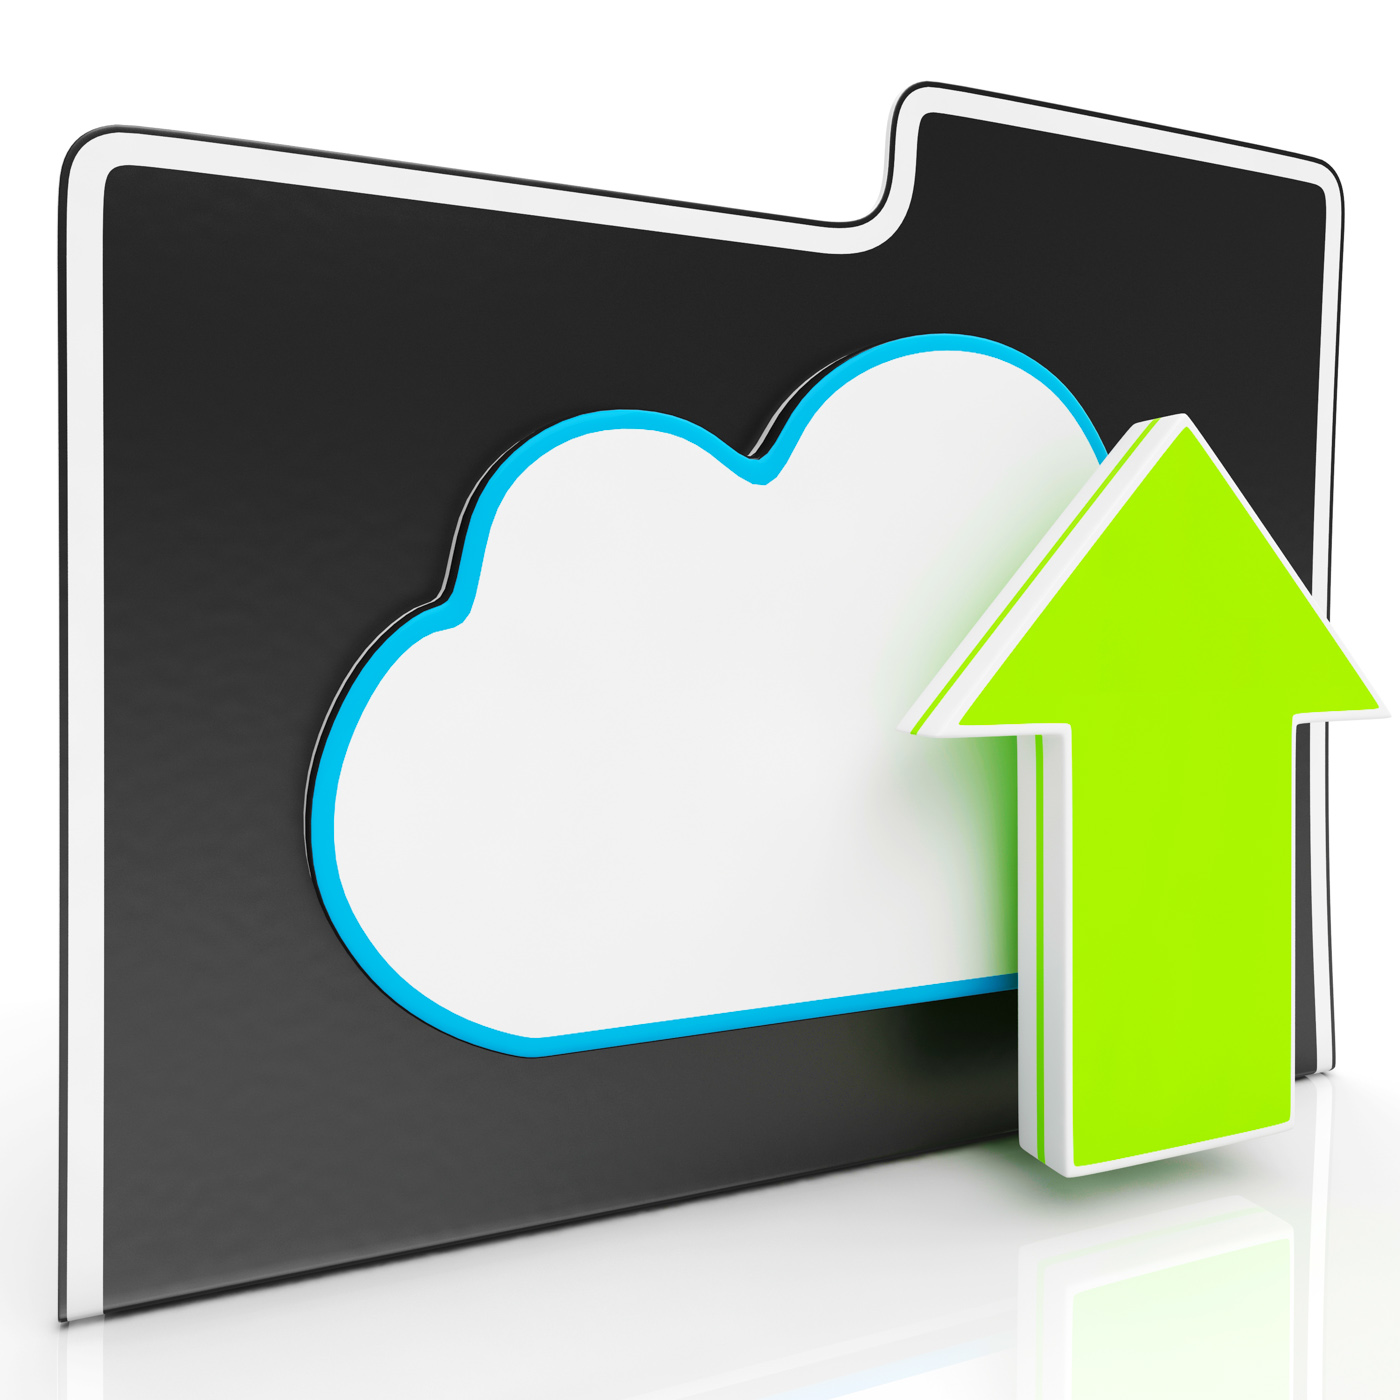 Upload Arrow And Cloud File Showing Uploading, Cloud, Cloudcomputing, Data, File, HQ Photo